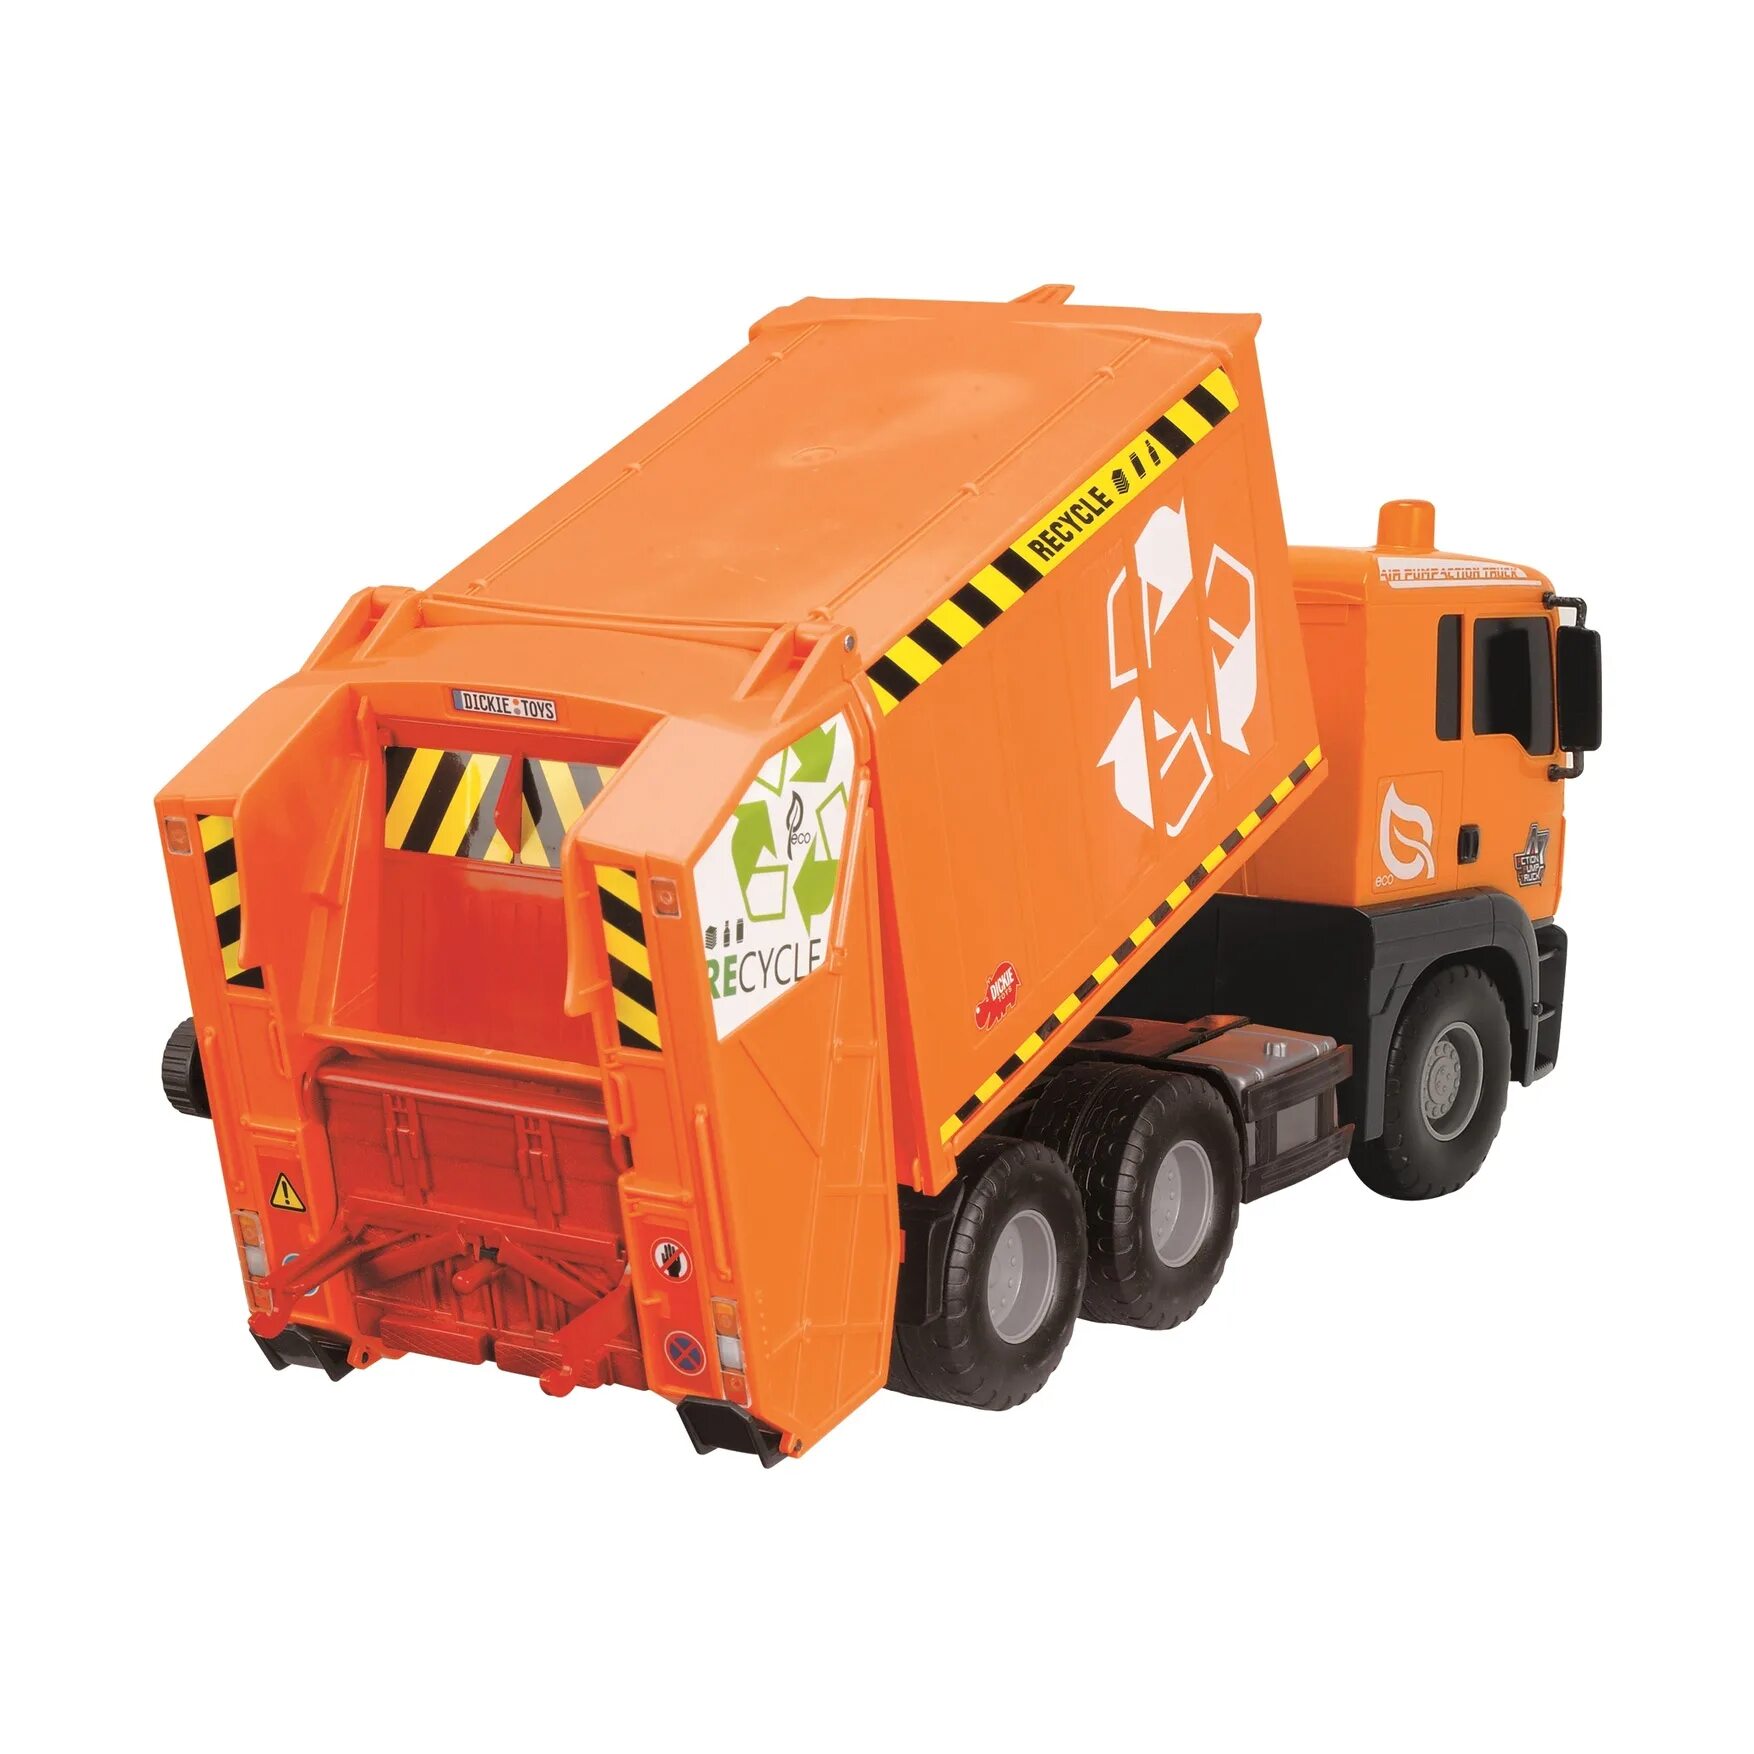 Мусоровоз Dickie Toys Air Pump (3809000) 55 см. Dickie Toys Garbage Truck мусоровоз. Мусоровоз Dickie Toys man (3749024) 55 см. Bruder 03560 мусоровоз Scania. Мусоровоз мальчик